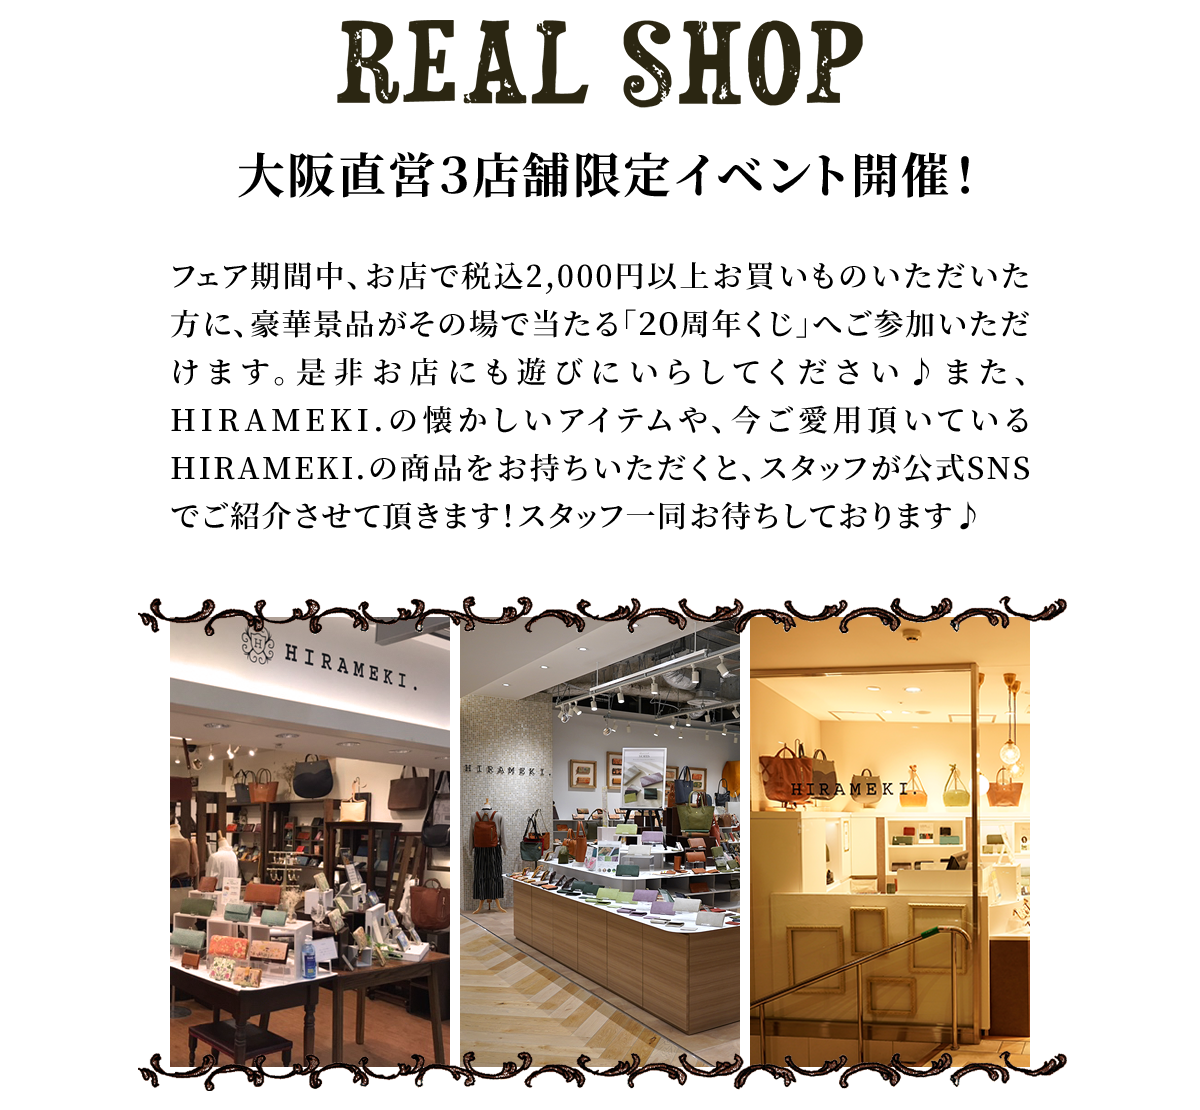 Real shop